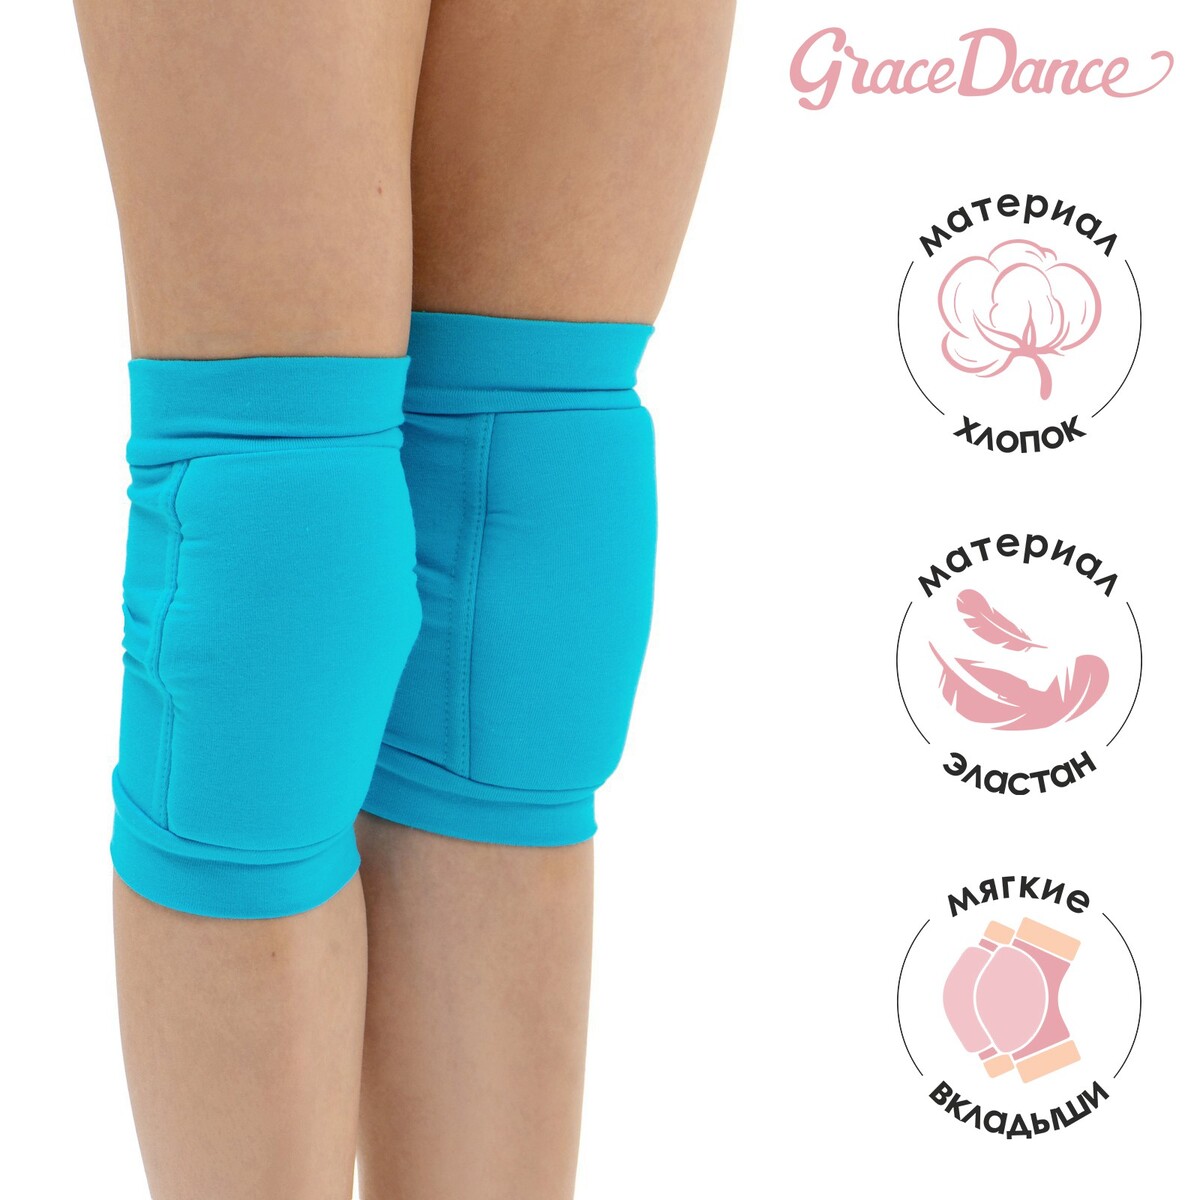 Наколенники для гимнастики и танцев с уплотнителем, р. l (от 15 лет), цвет бирюзовый Grace Dance